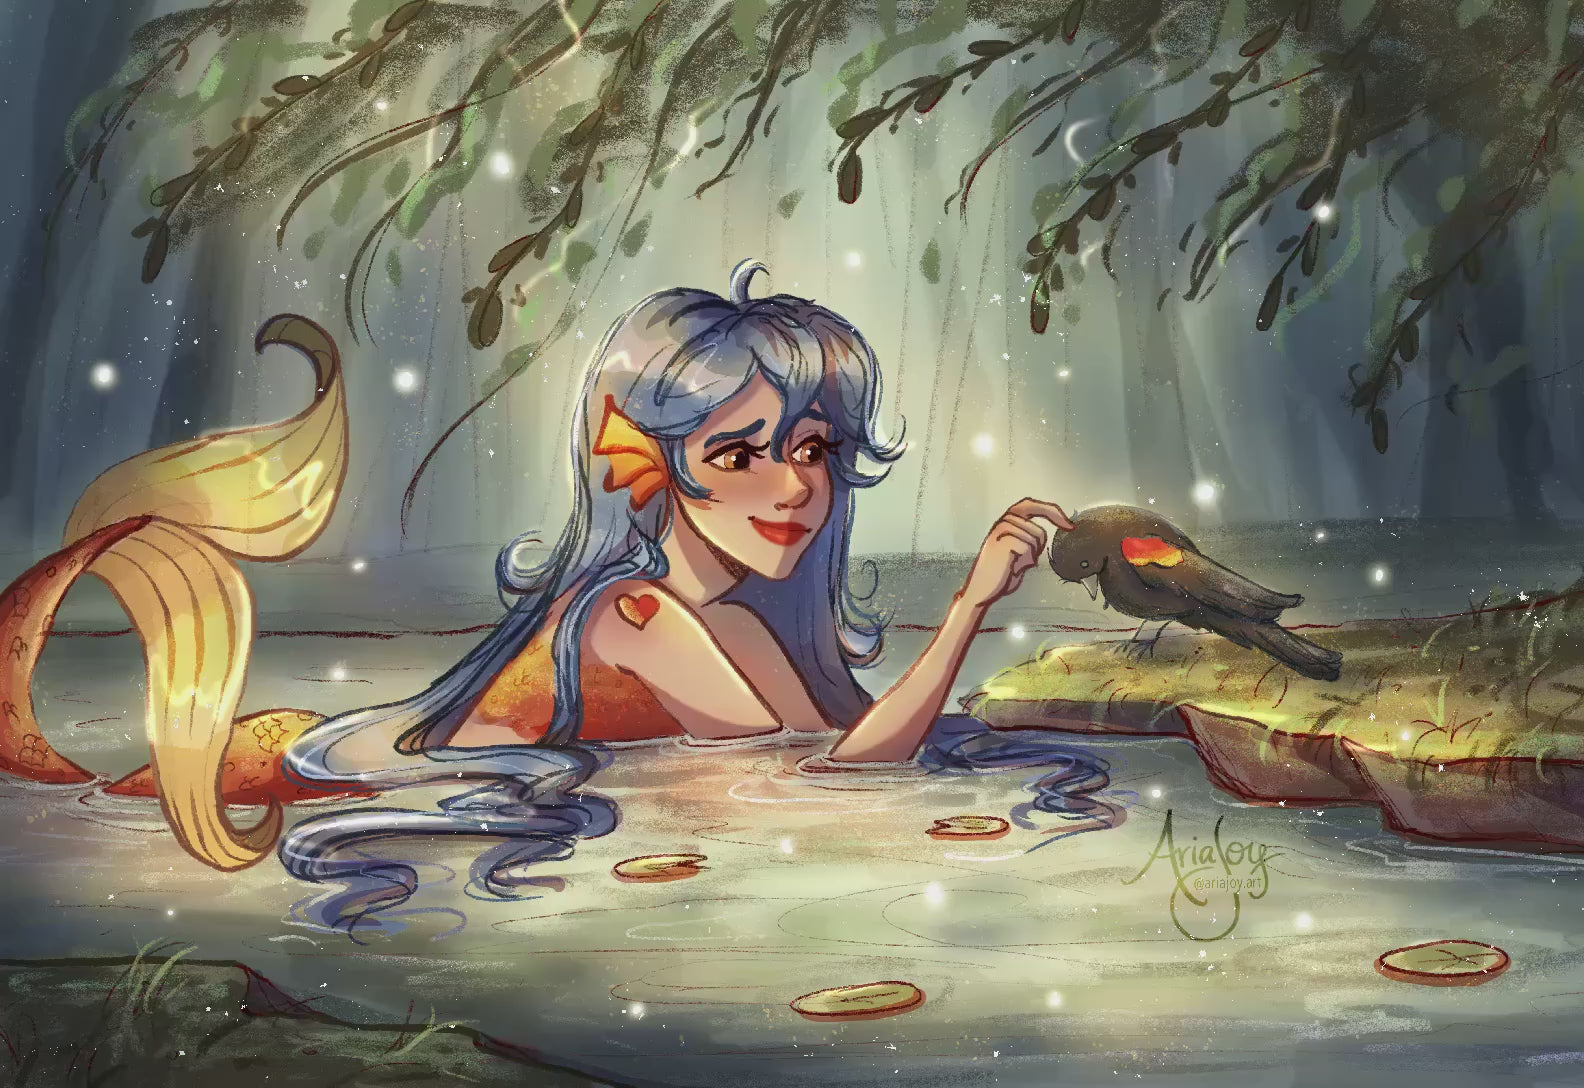 Load video: Aria Joy Art: Drawing Timelapse of Lazuli the Mermaid